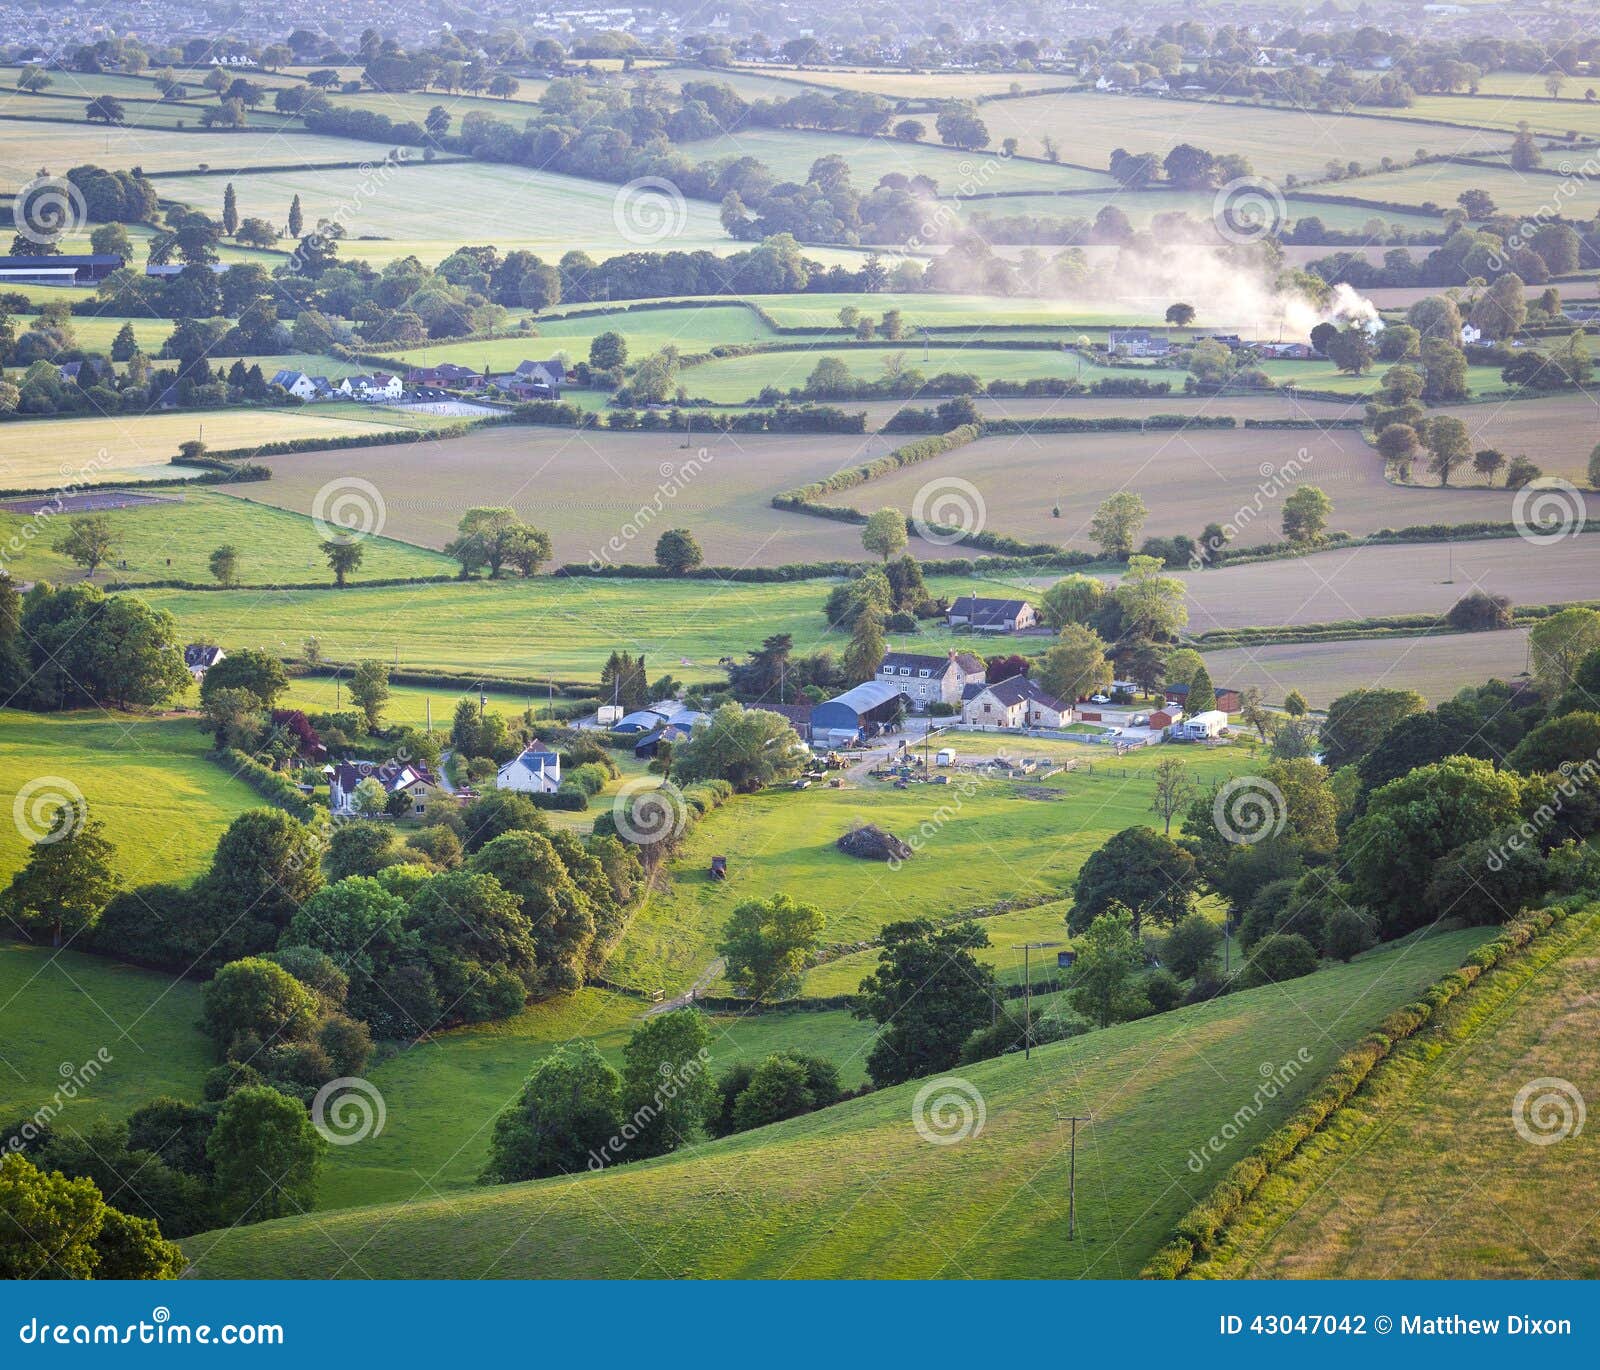 idyllic rural farmland, cotswolds uk